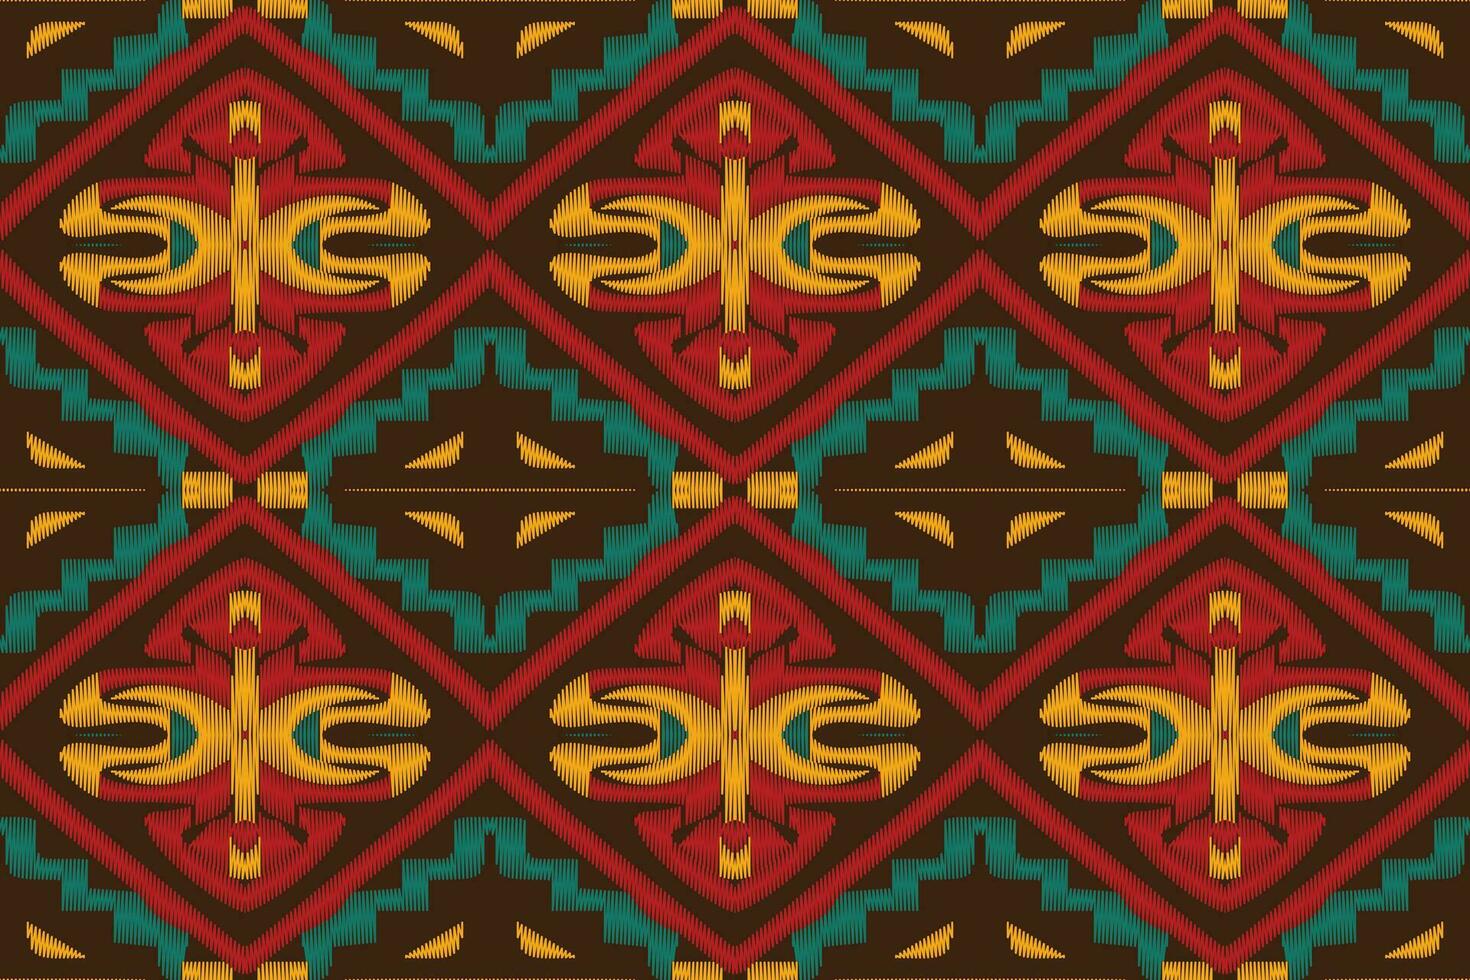 ikat damasco cachemir bordado antecedentes. ikat damasco geométrico étnico oriental modelo tradicional.azteca estilo resumen vector ilustración.diseño para textura,tela,ropa,envoltura,pareo.